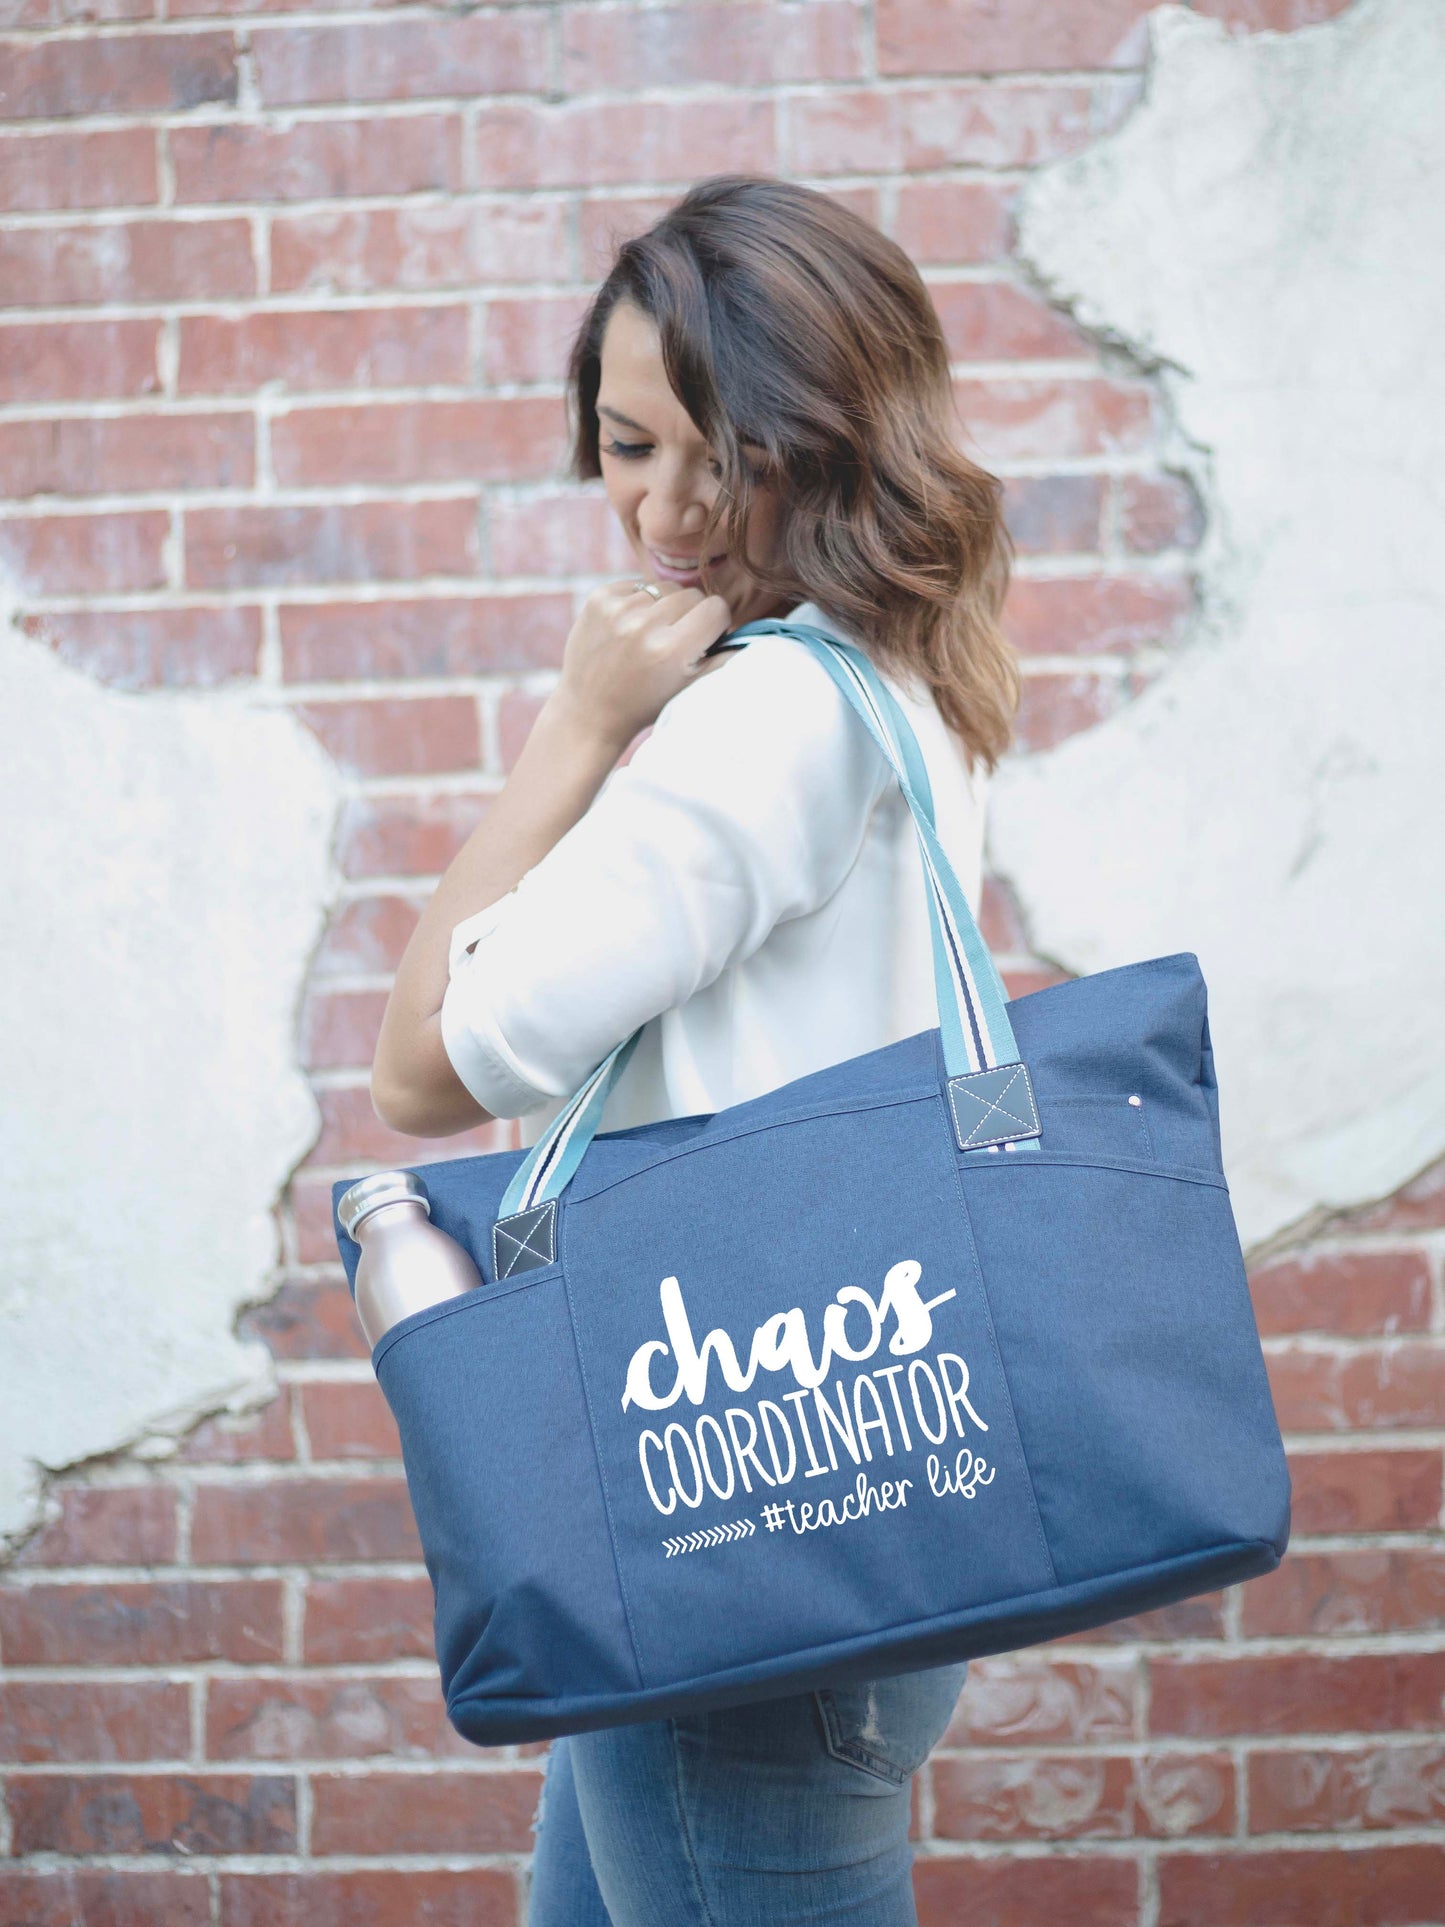 Chaos Coordinator #Teacher Life Teal Tessa Zippered Tote Bag